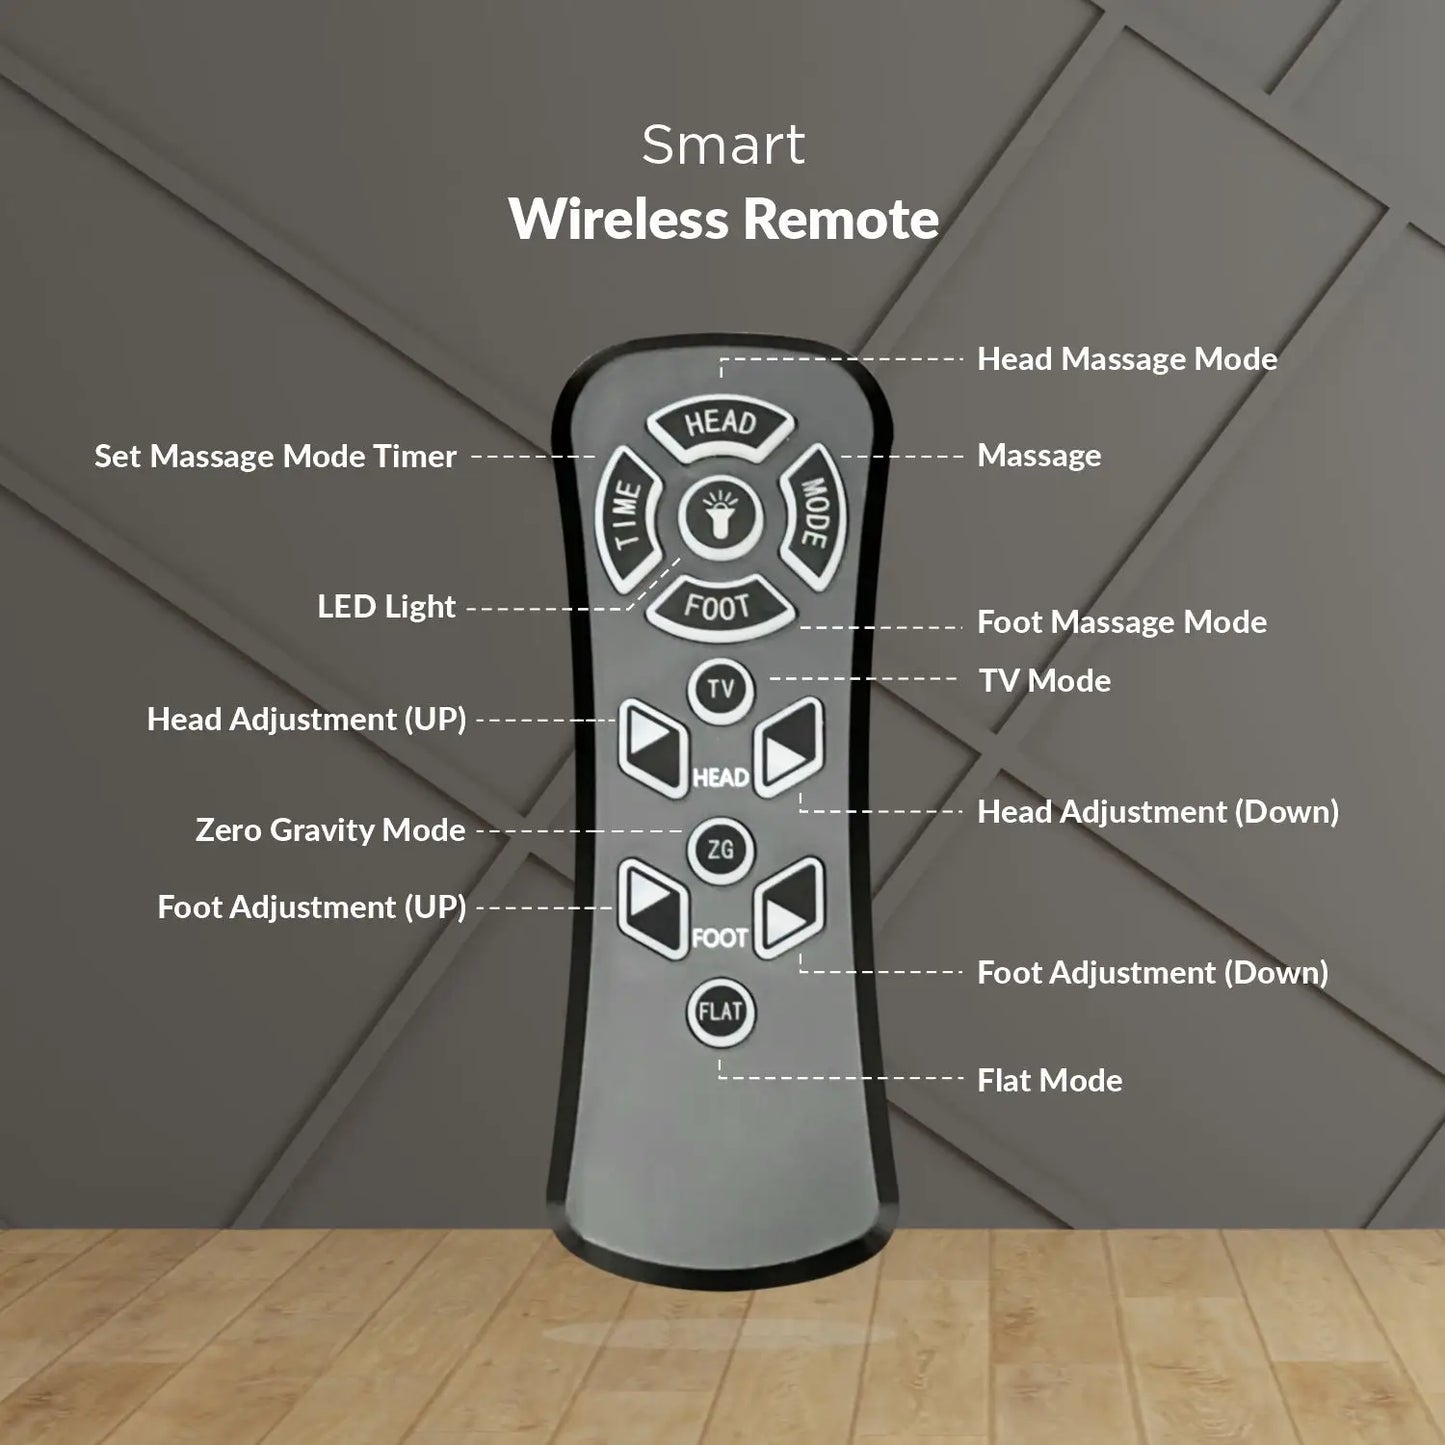 Smart Wireless Remote